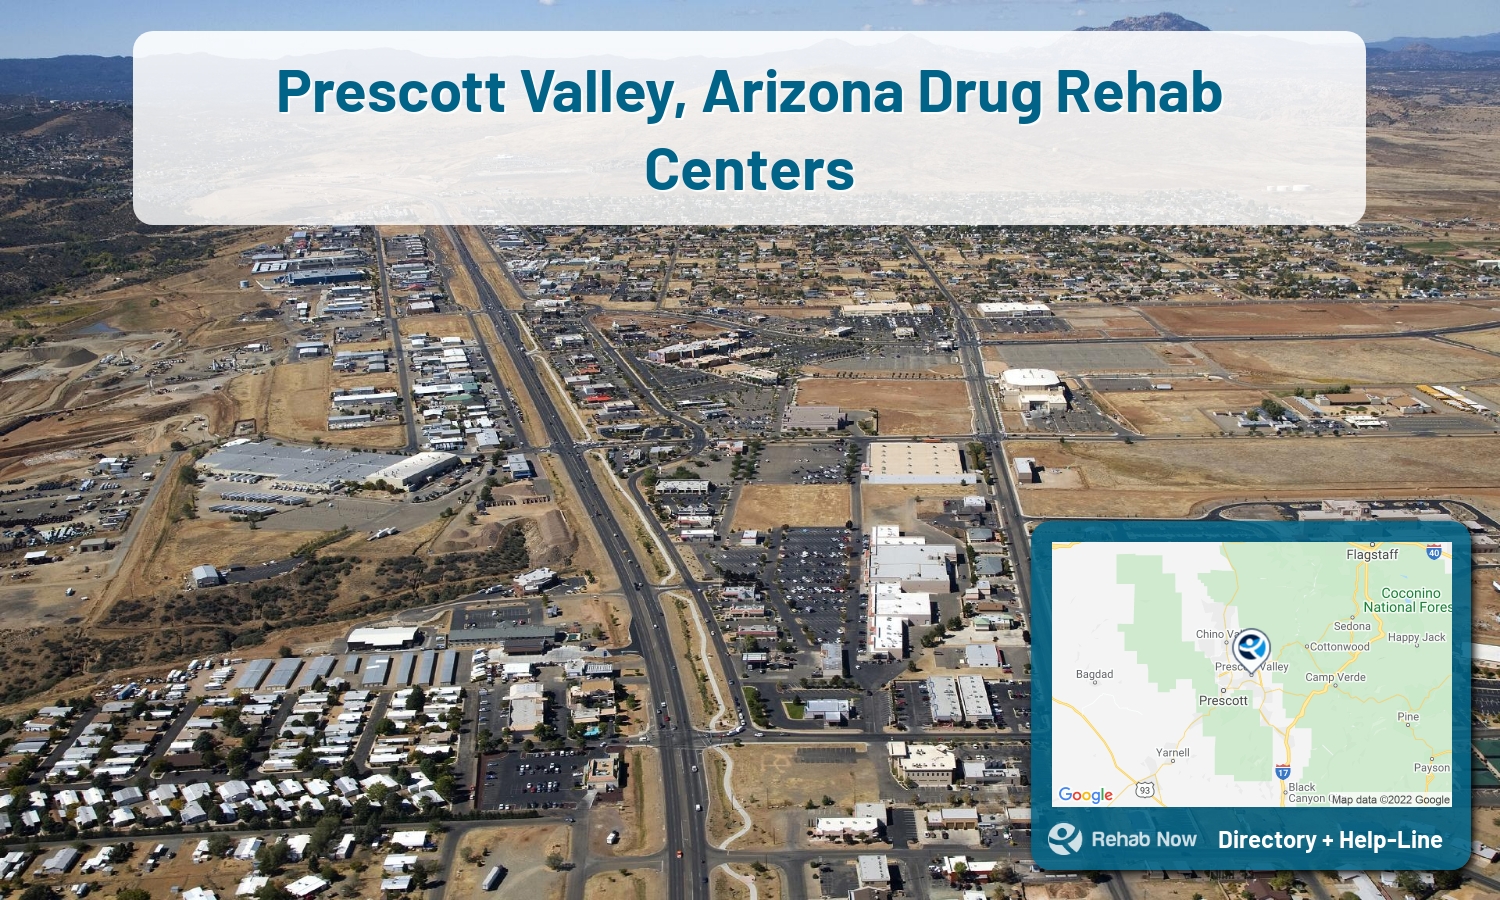 Prescott Valley, AZ Treatment Centers. Find drug rehab in Prescott Valley, Arizona, or detox and treatment programs. Get the right help now!